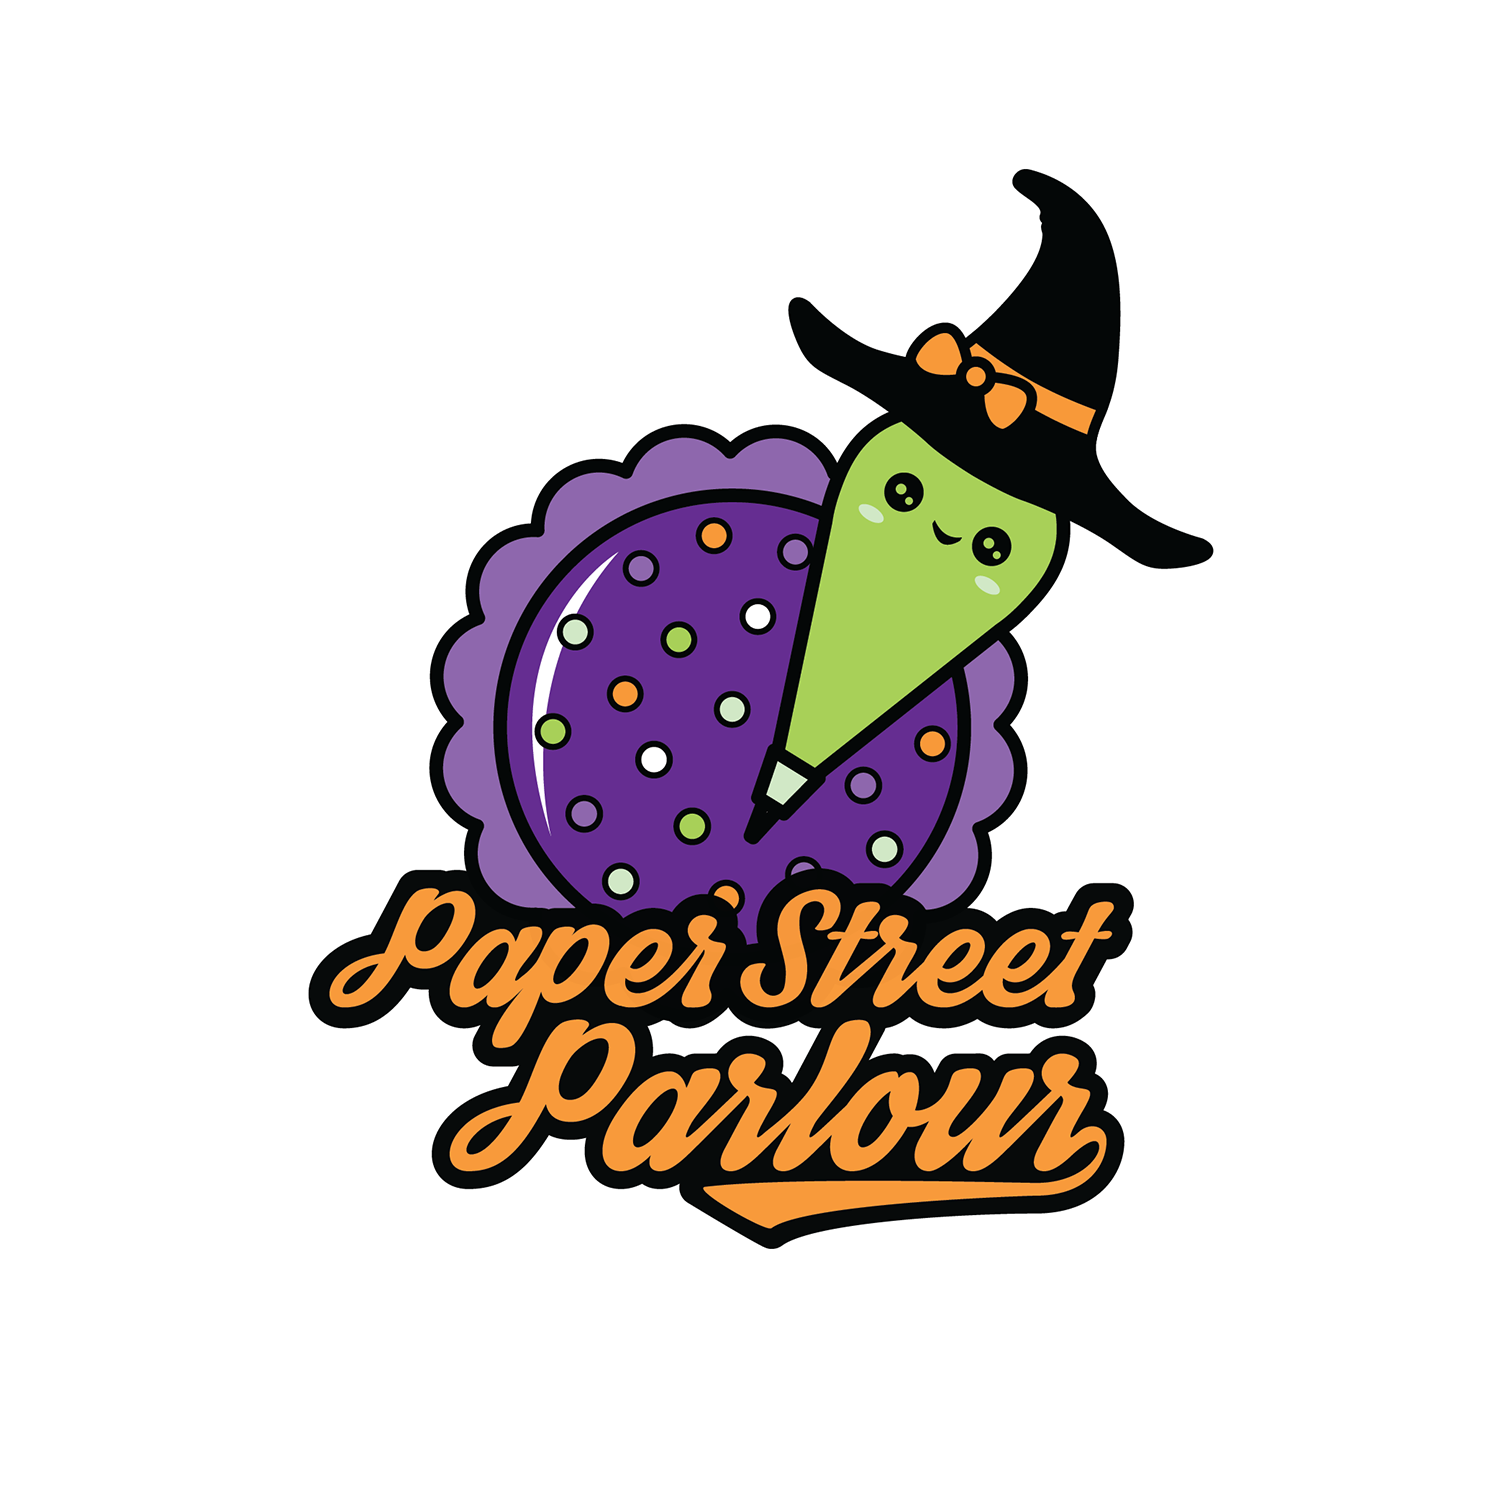 Paper Street Parlour Halloween Logo